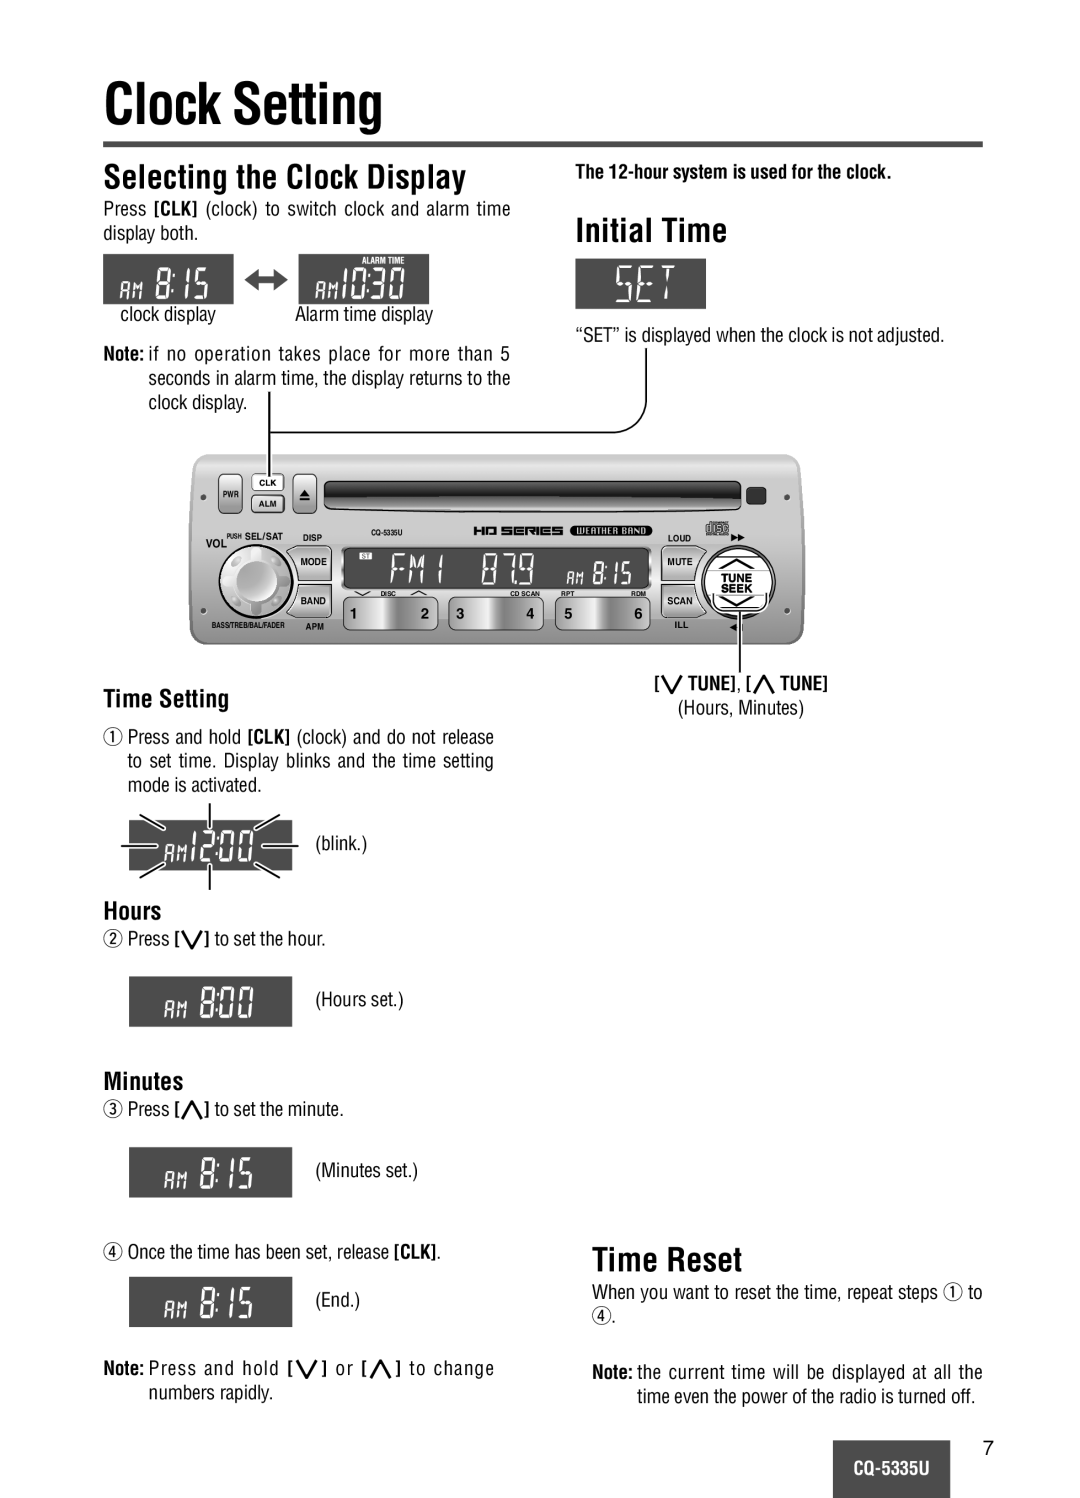 Panasonic CQ-5335U Clock Setting, Selecting the Clock Display, Initial Time, Time Reset, Time Setting, Hours, Minutes 